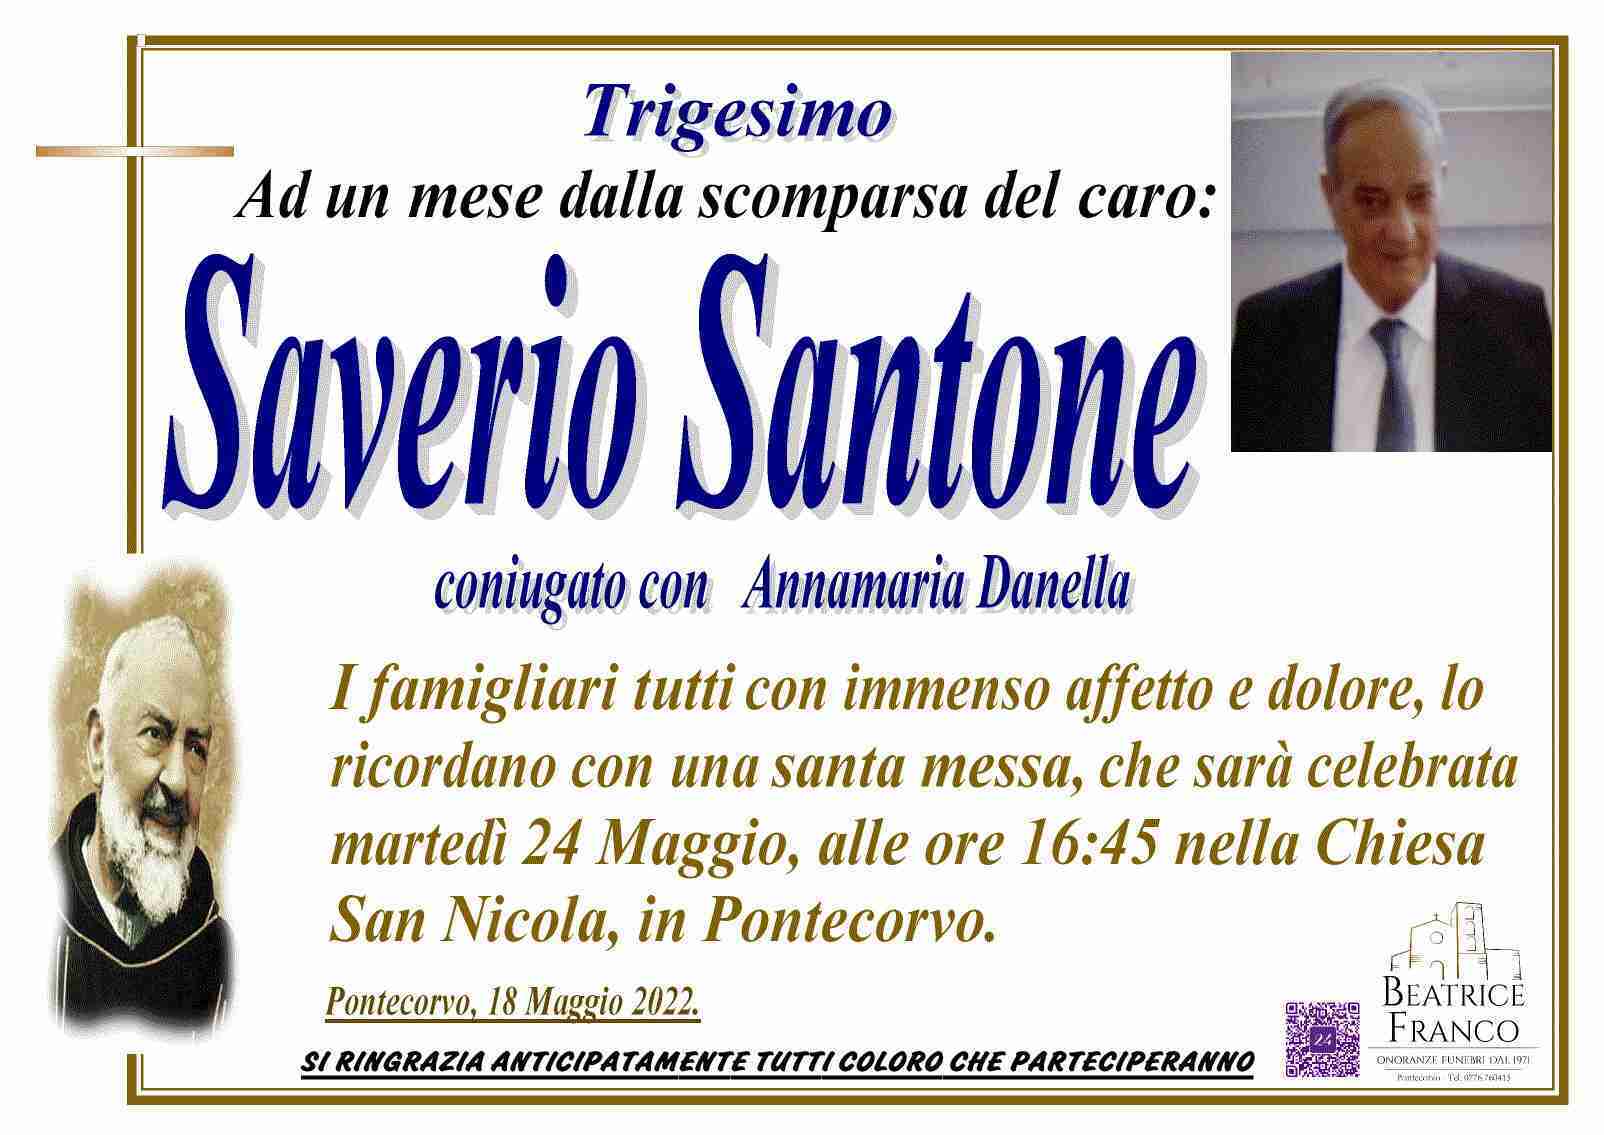 Saverio Santone